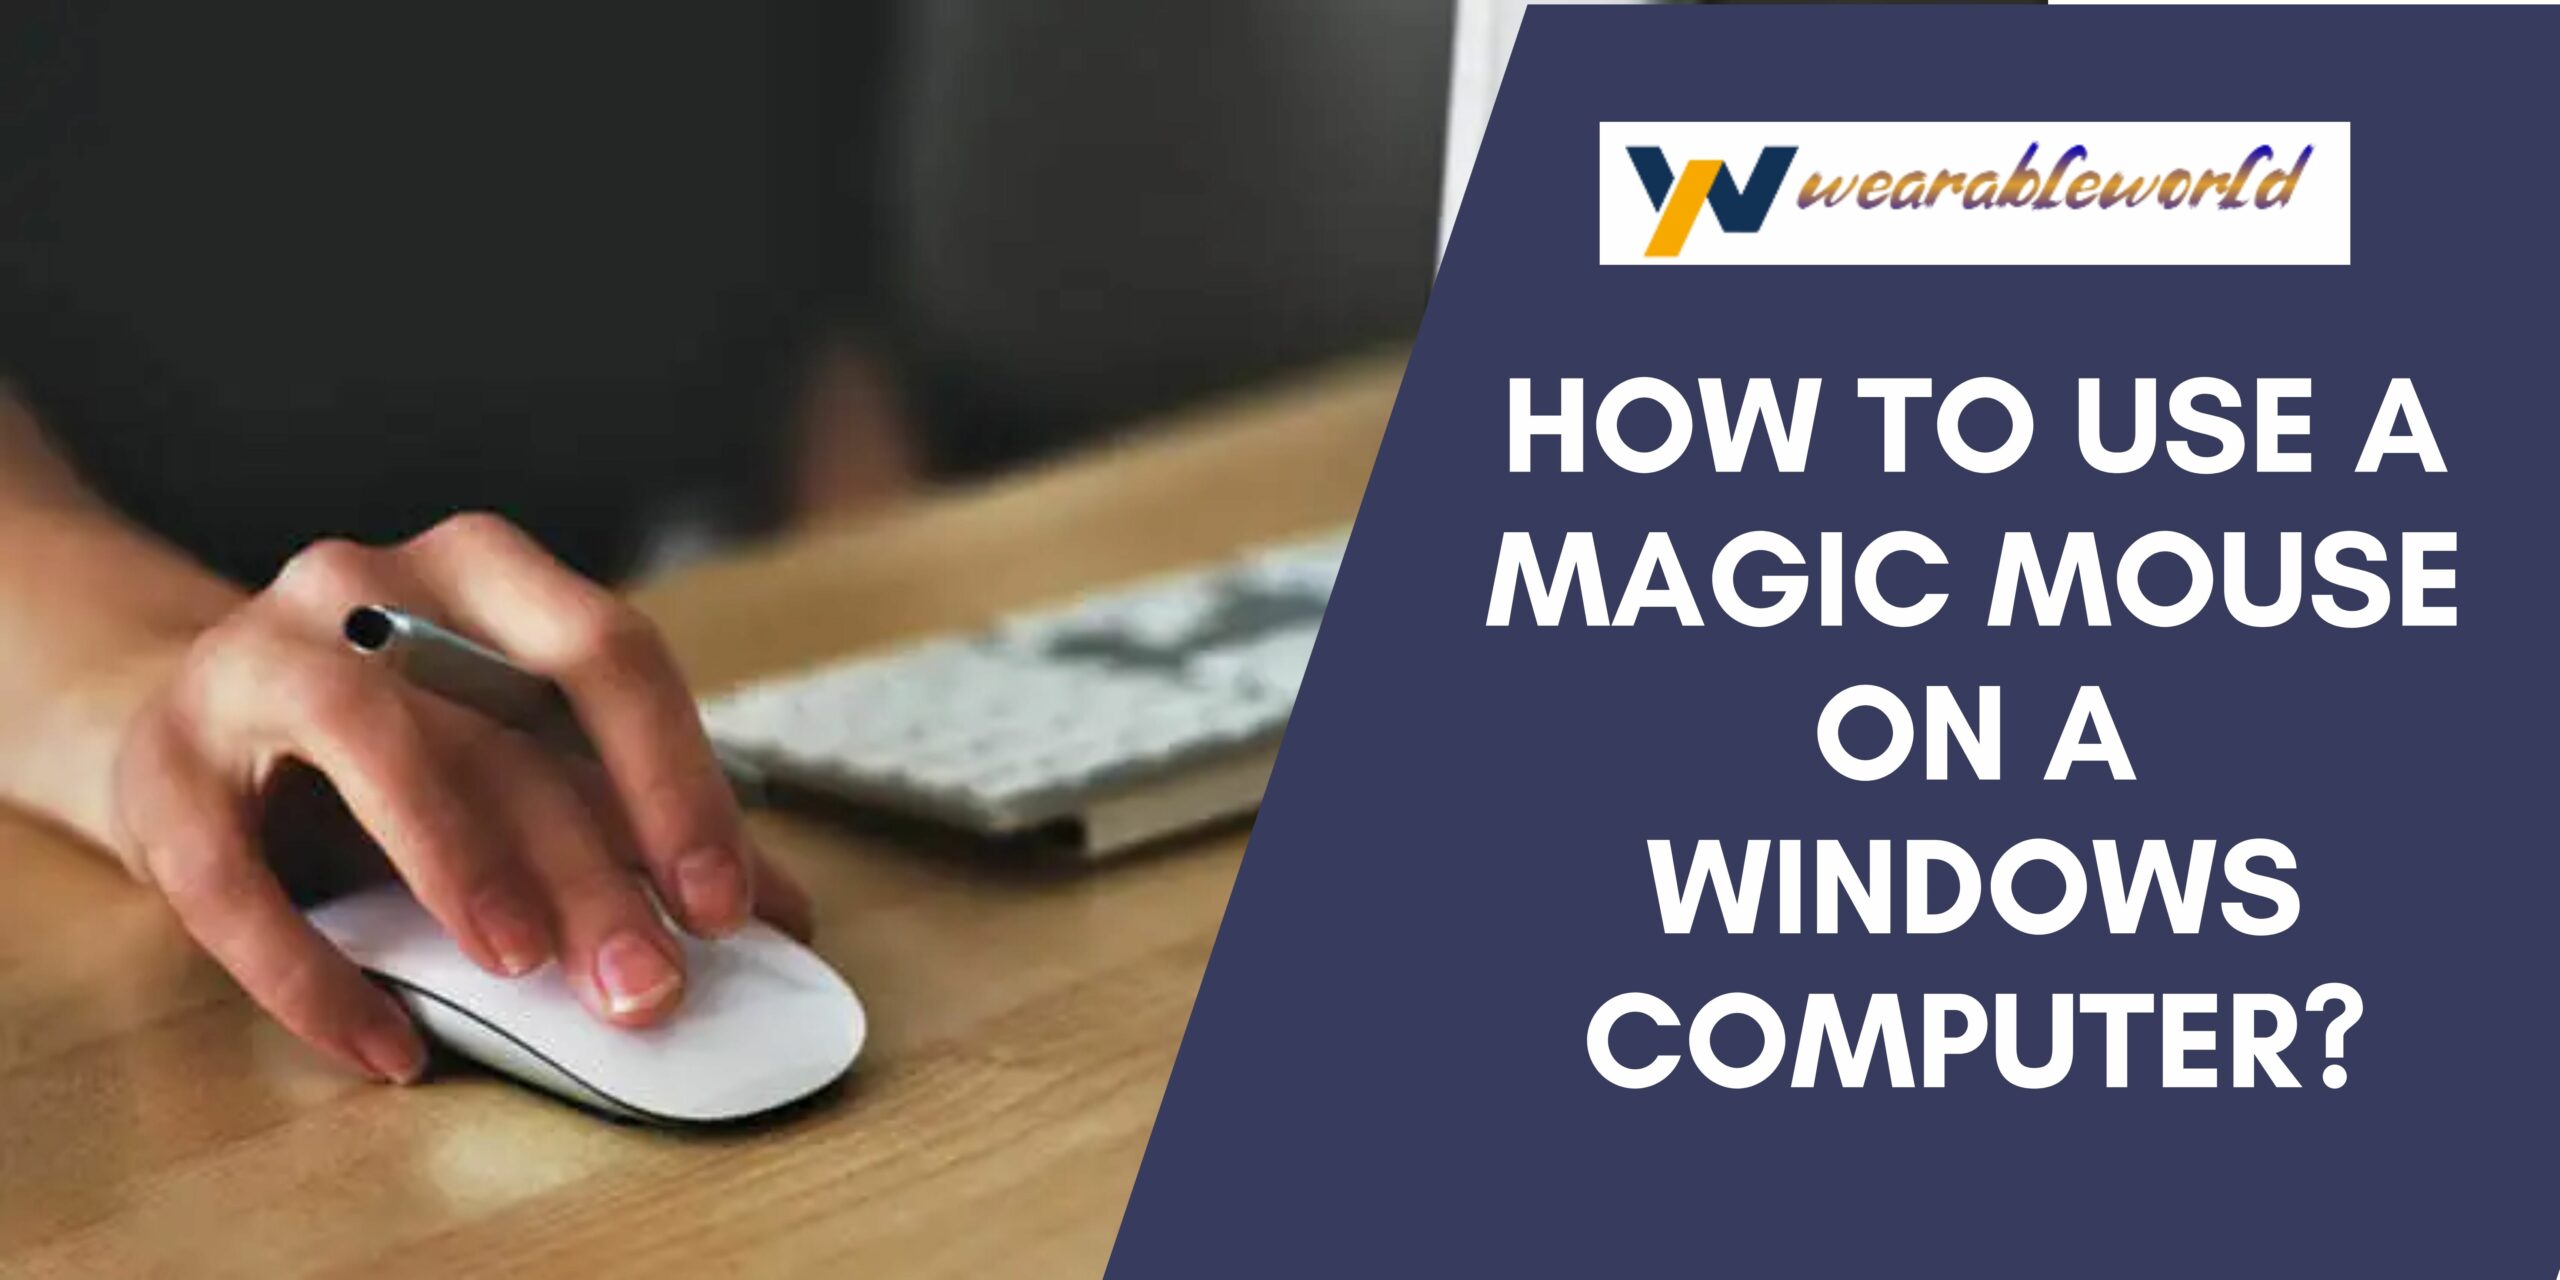 Use a Magic Mouse on a Windows computer